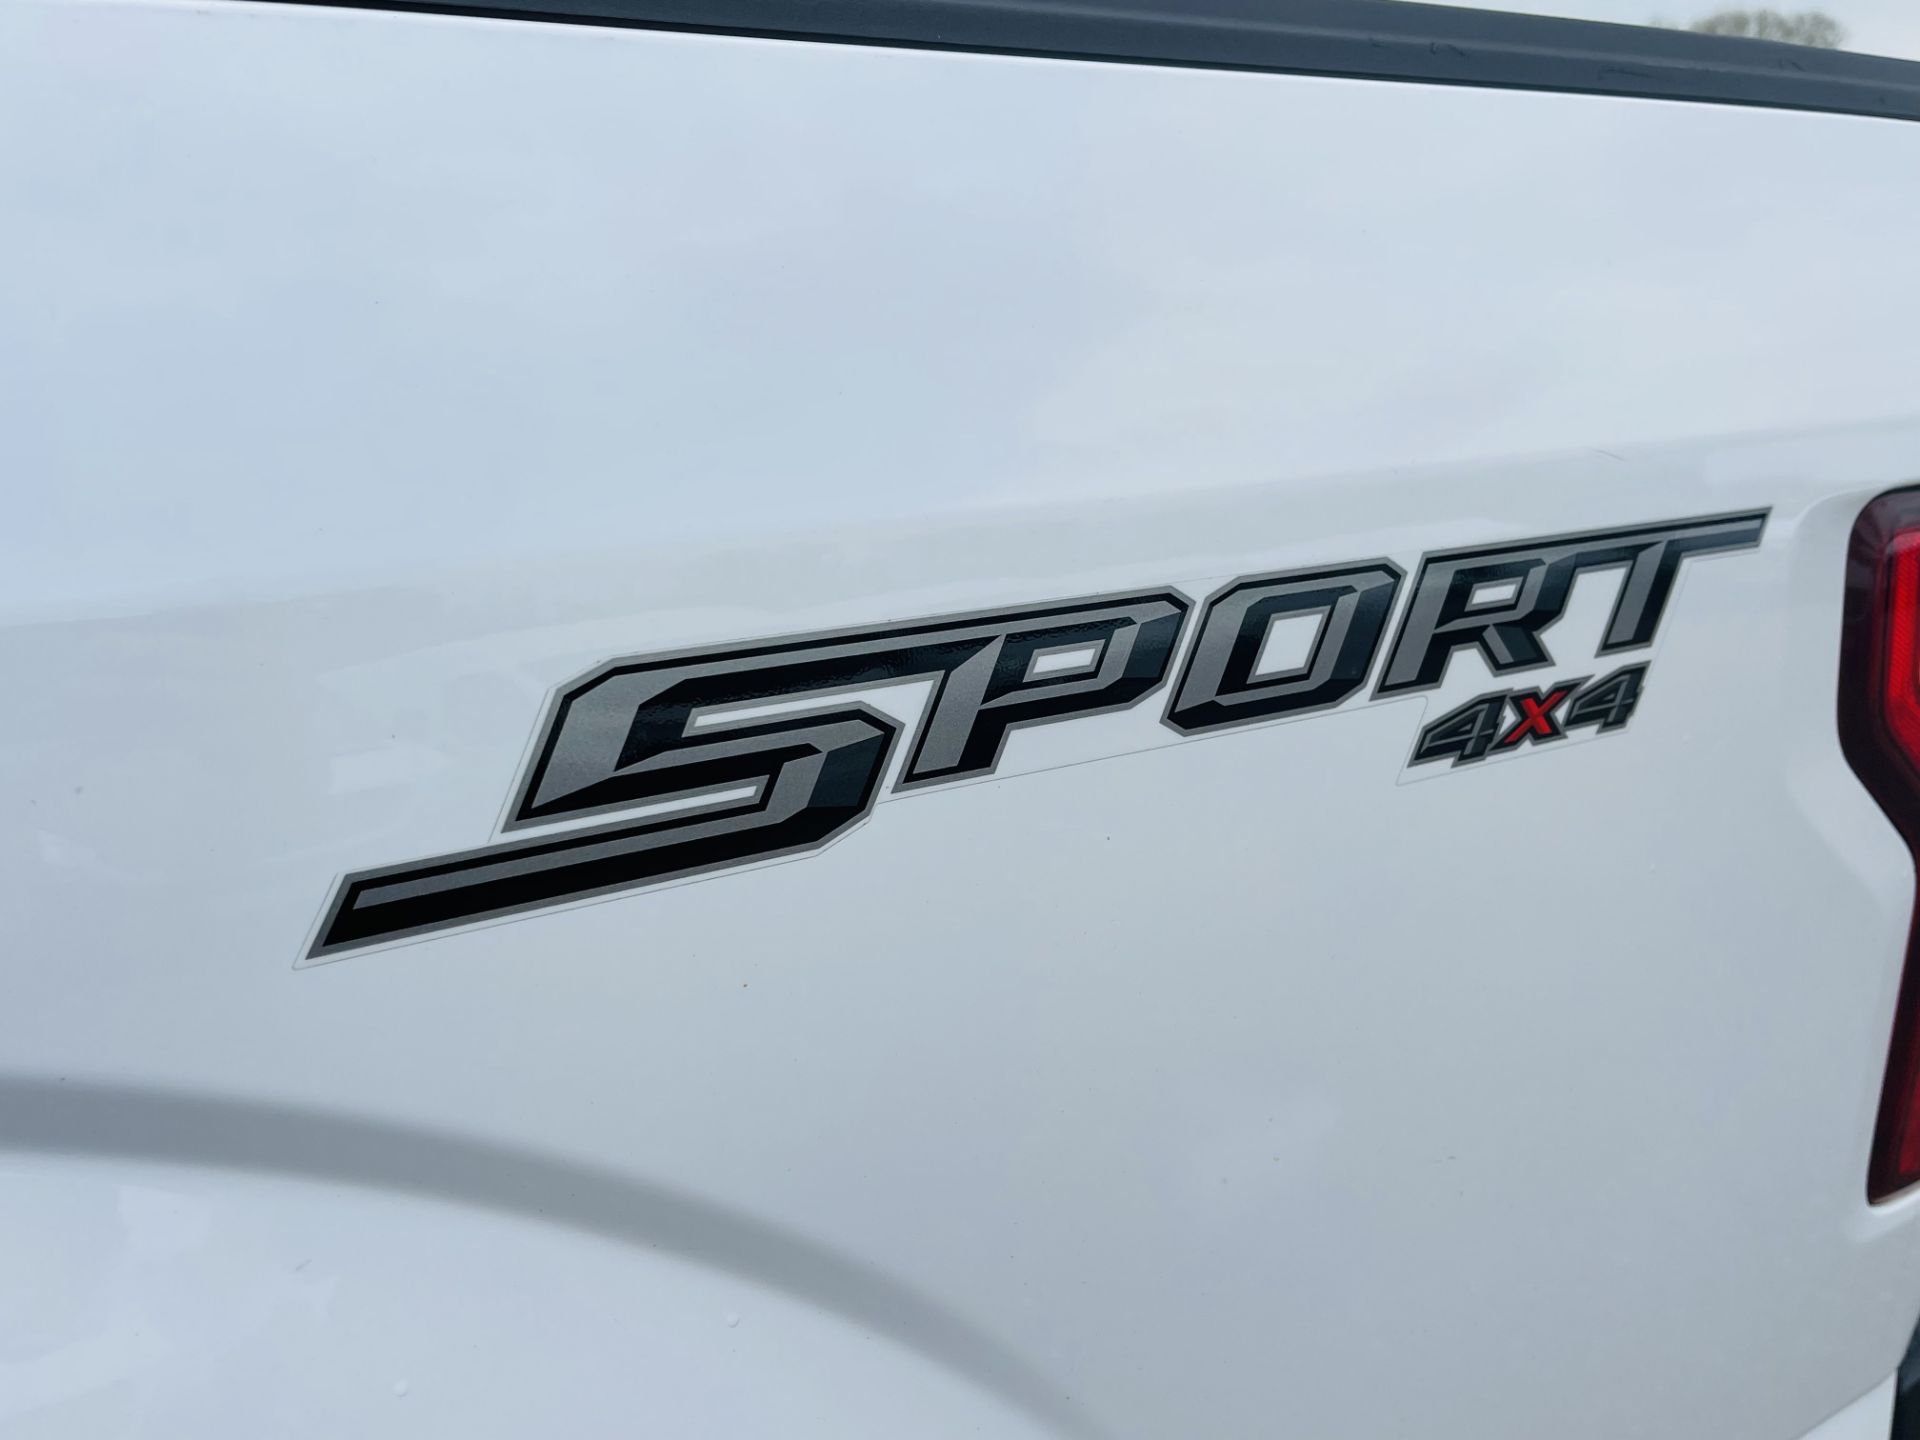 Ford F-150 XLT Sport 2.7L V6 EcoBoost 4WD ' 2018 Year ' Sat Nav - A/C - ULEZ Compliant - LHD - Image 10 of 38